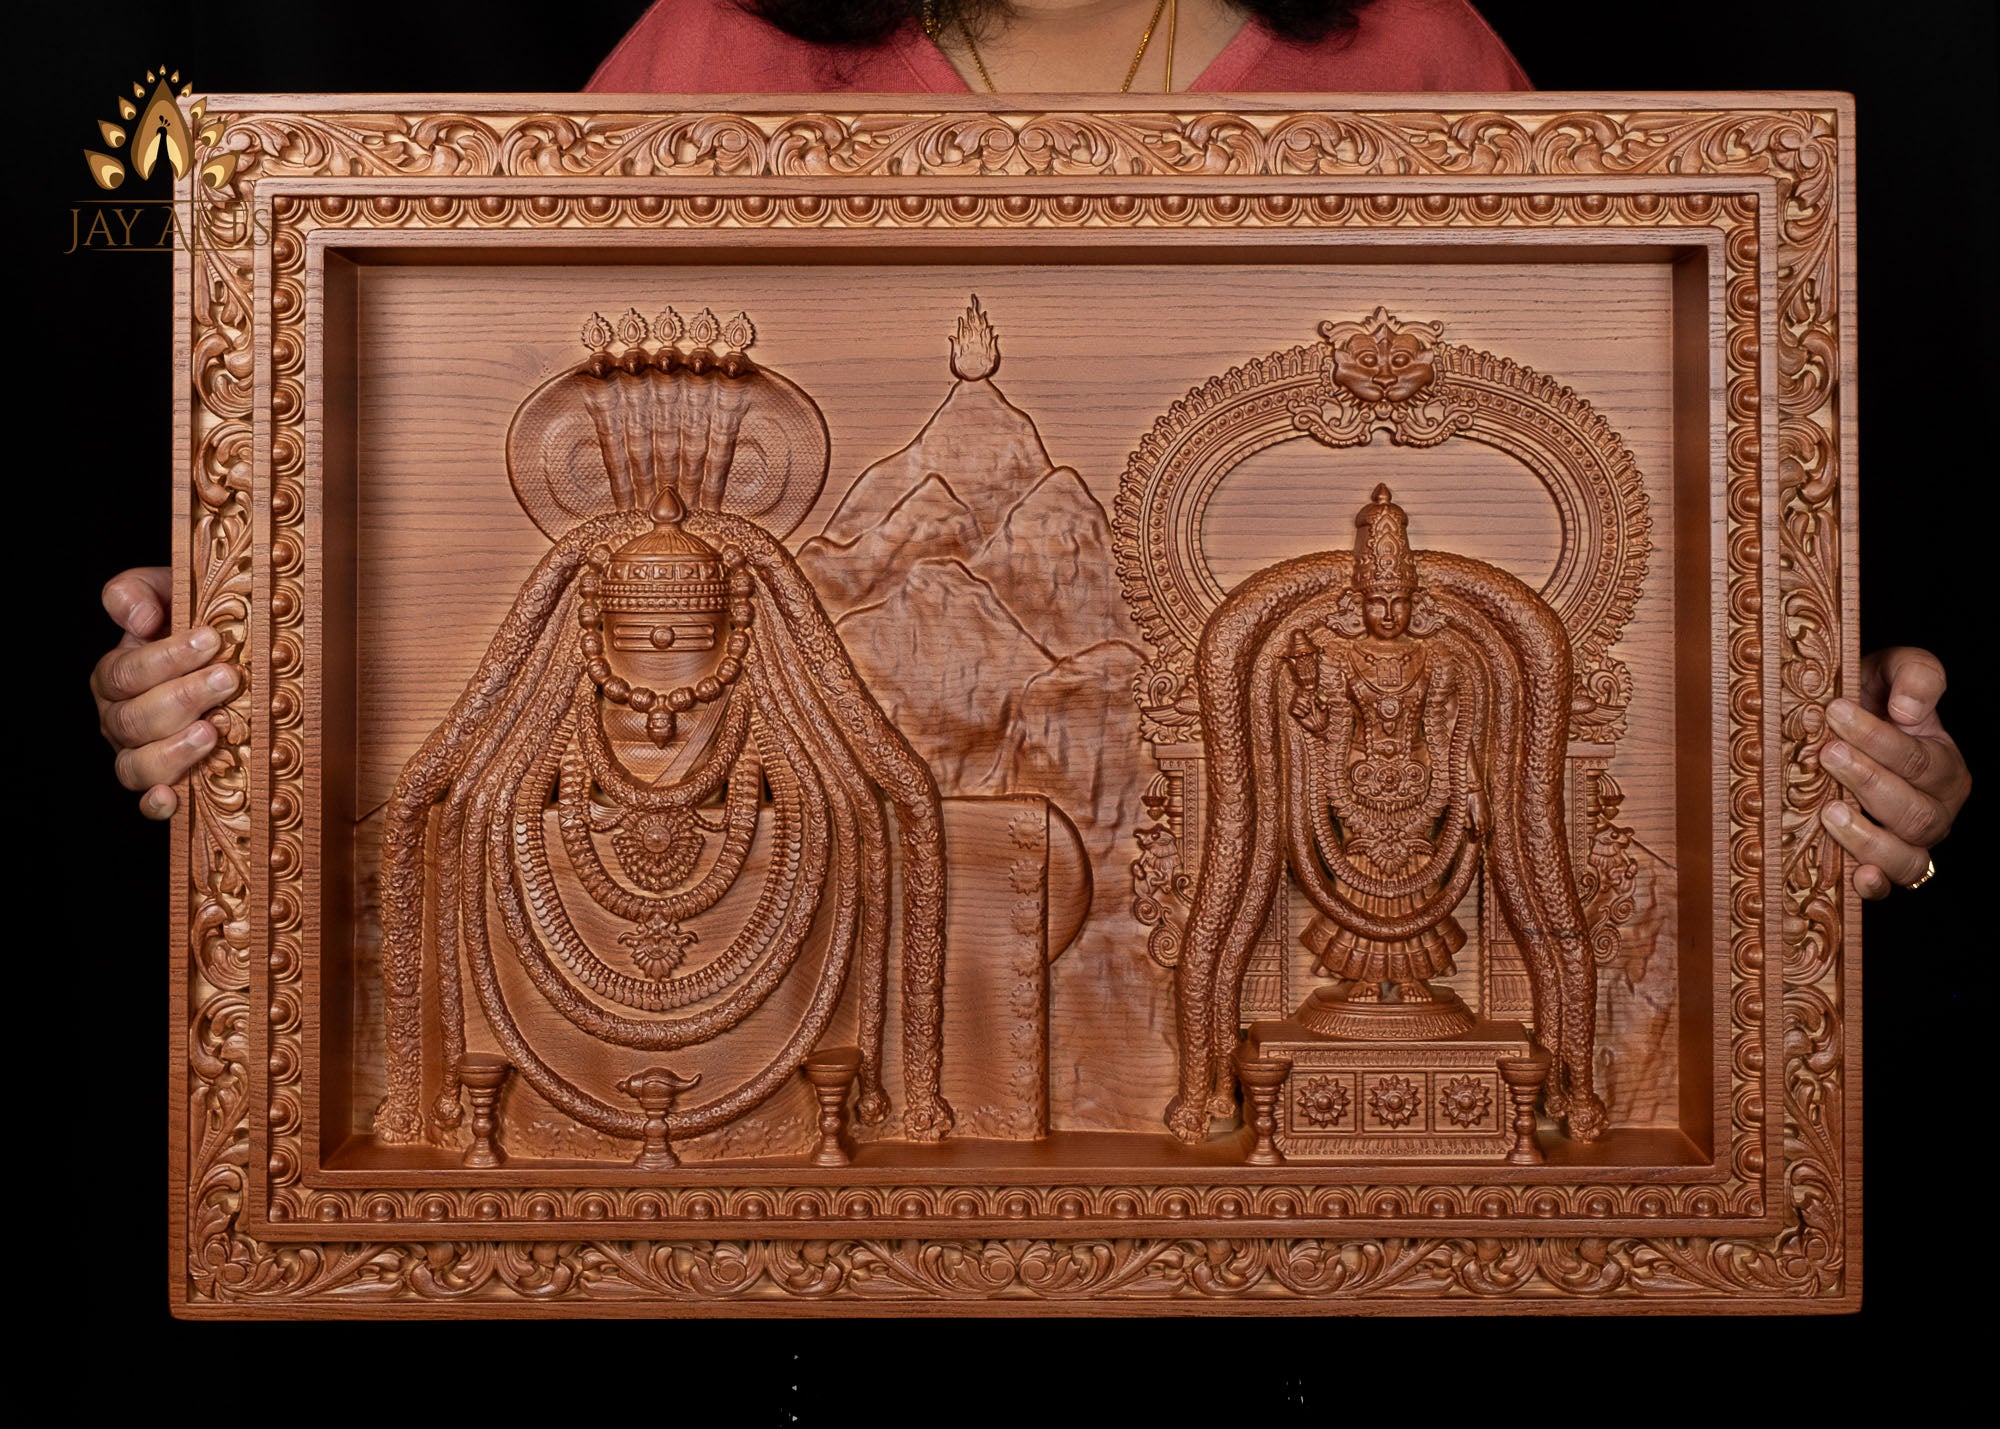 Lord Arunachaleswara with his consort Sri Unnamalai Amman 20"H x 27"W - Annamalaiyar Wood Carving